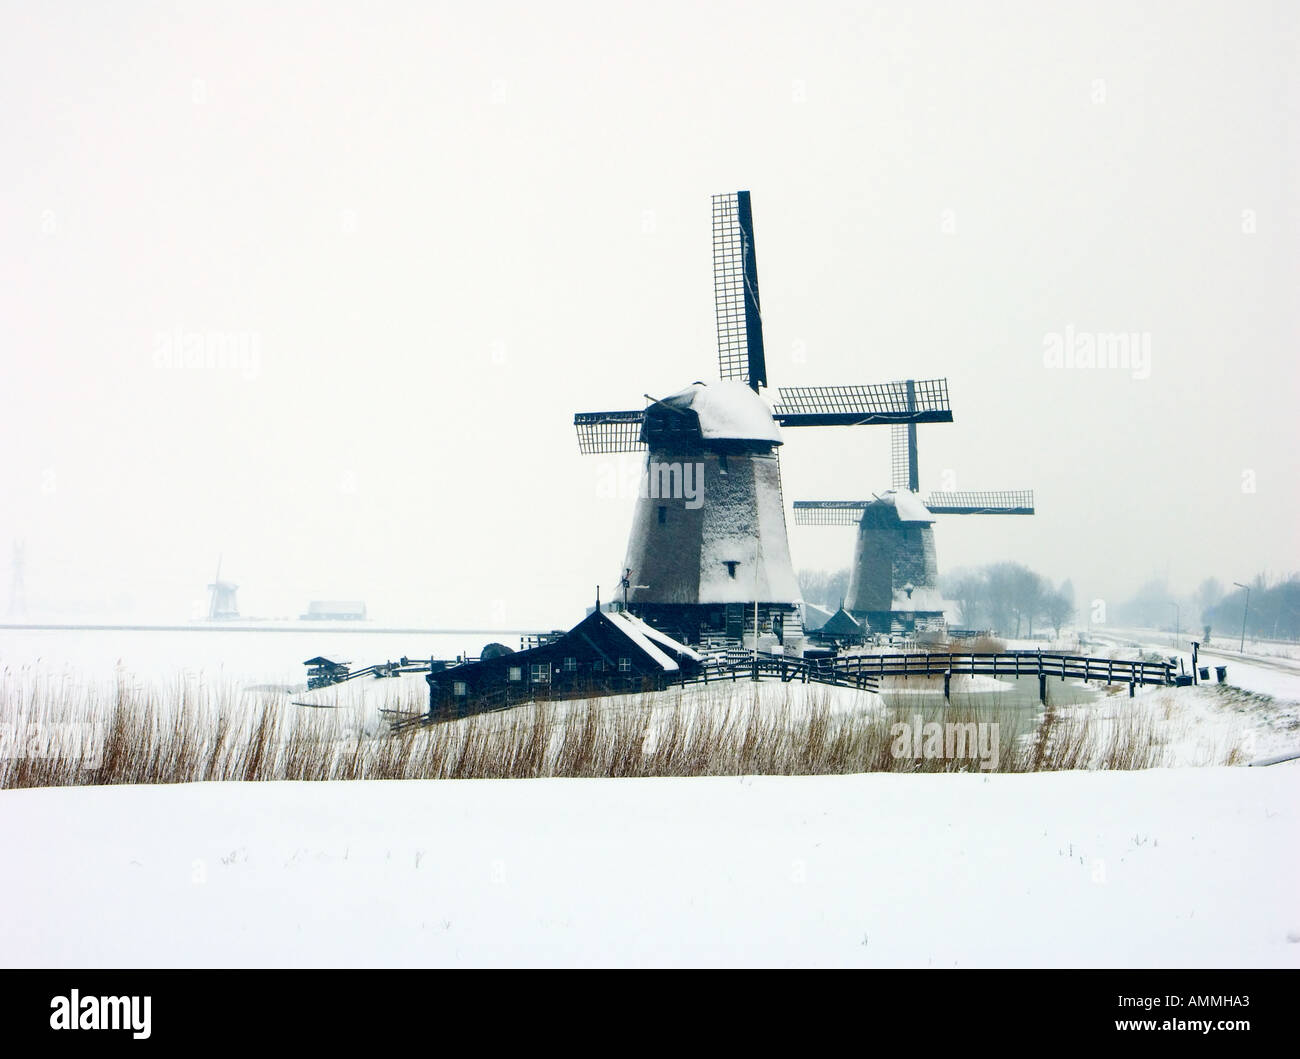 Windmills in winter landscape Stock Photo